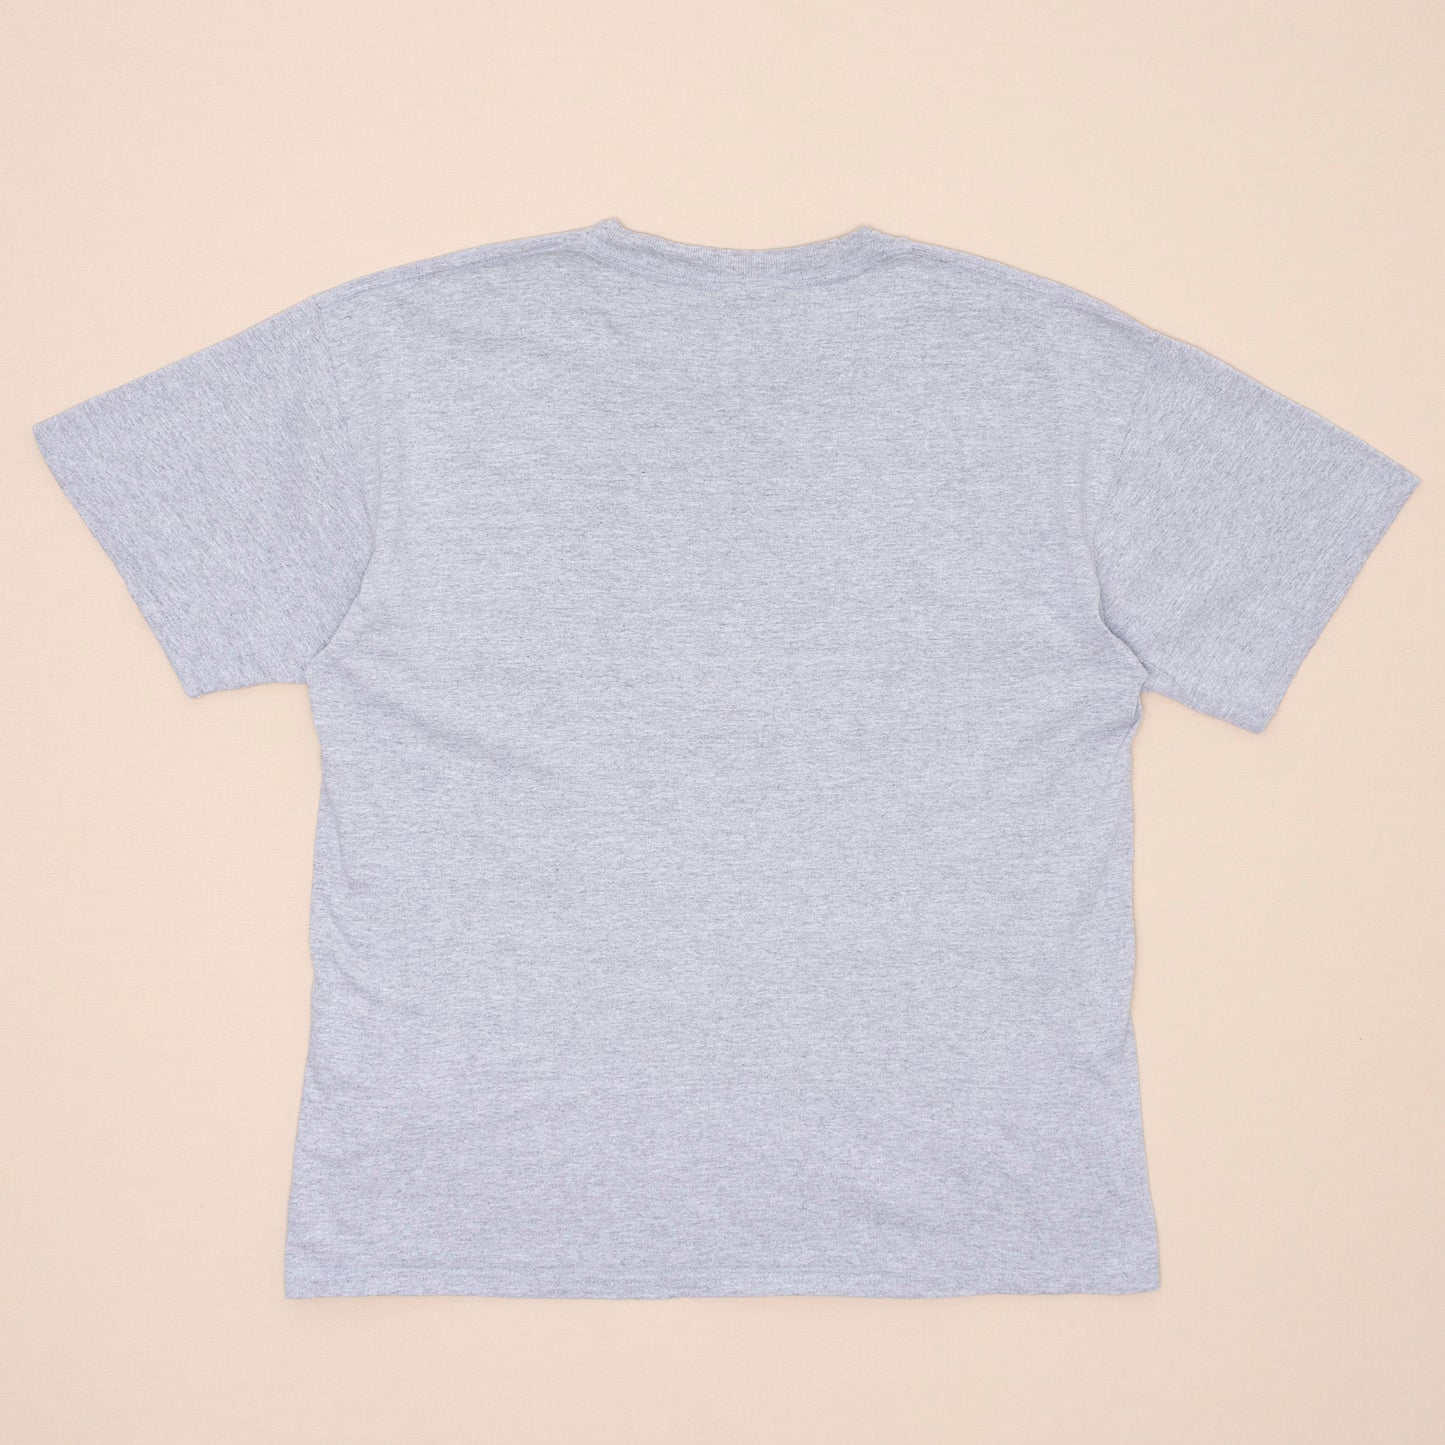 South Padre Souvenir T Shirt, XL